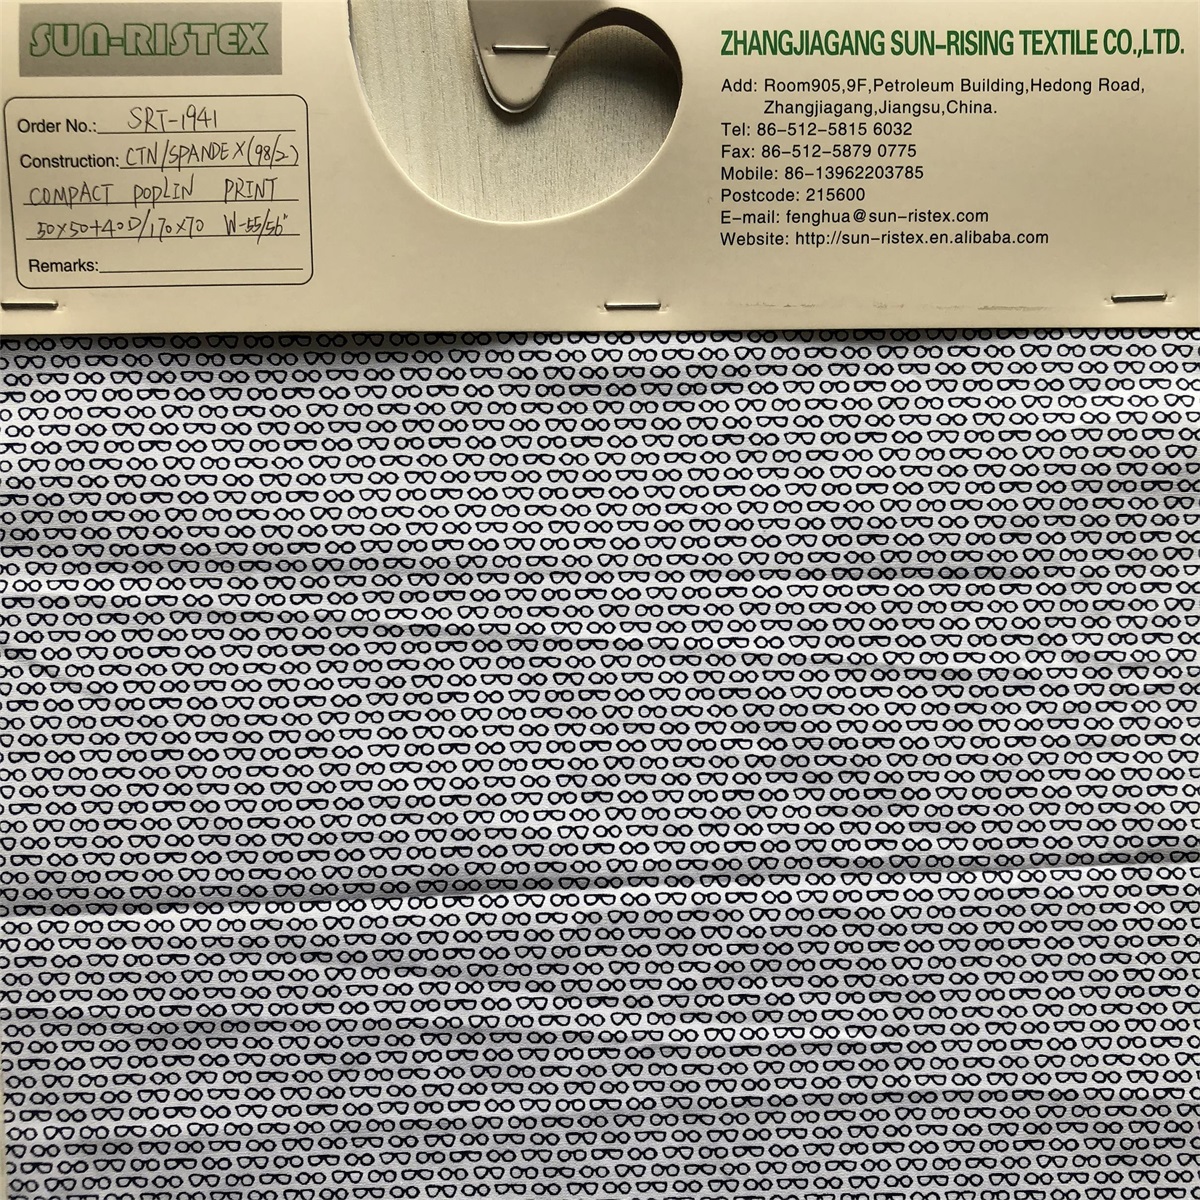 New fashionable pattern Spandex Fabric by compact yarn 98% cotton 2% spandex elasthane poplin printed shirts woven stretchy fabric